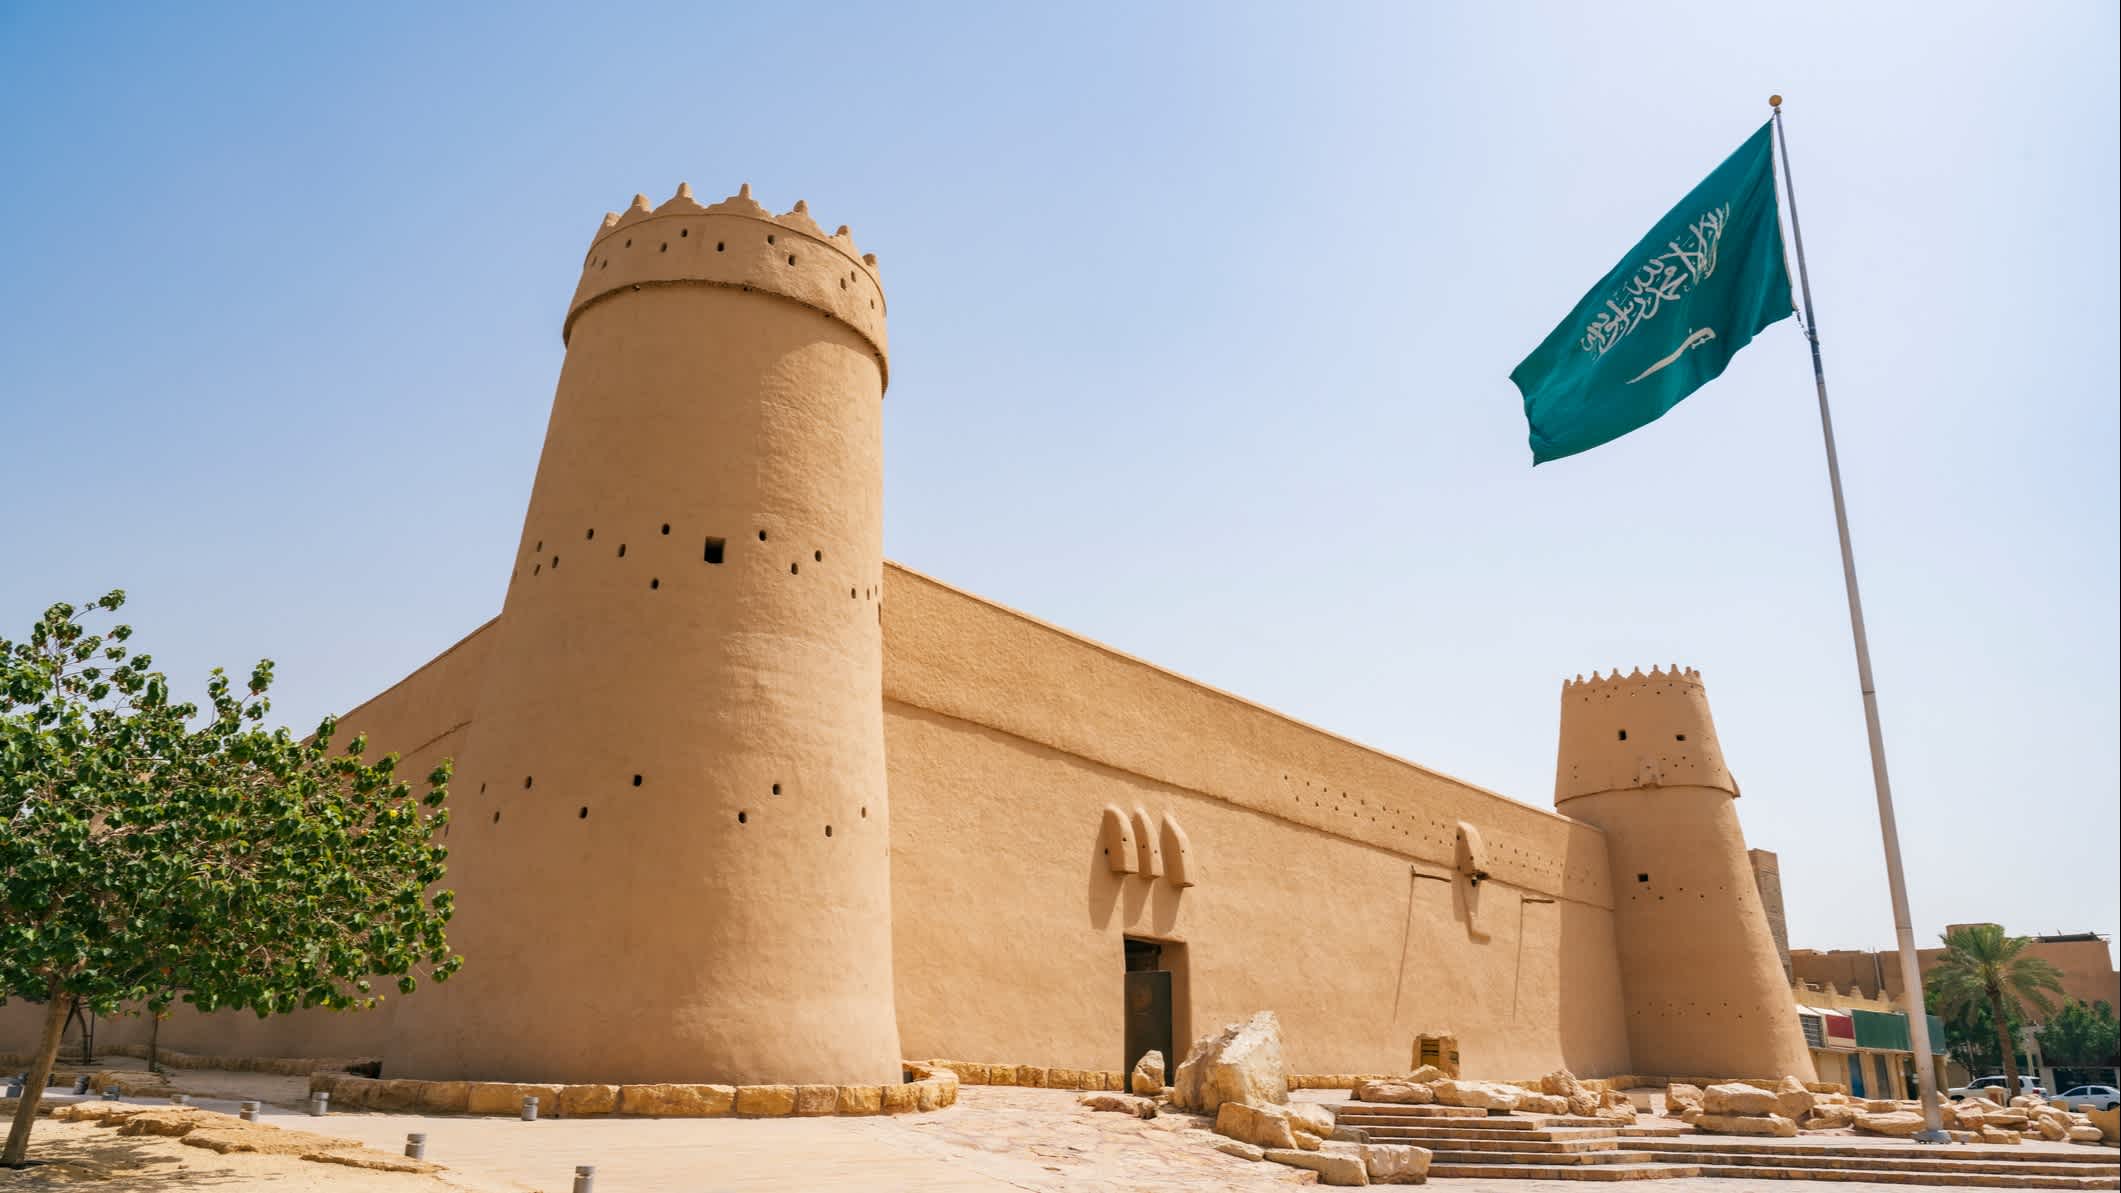 Blick auf den Masmak Fort, Riad, Saudi-Arabien.